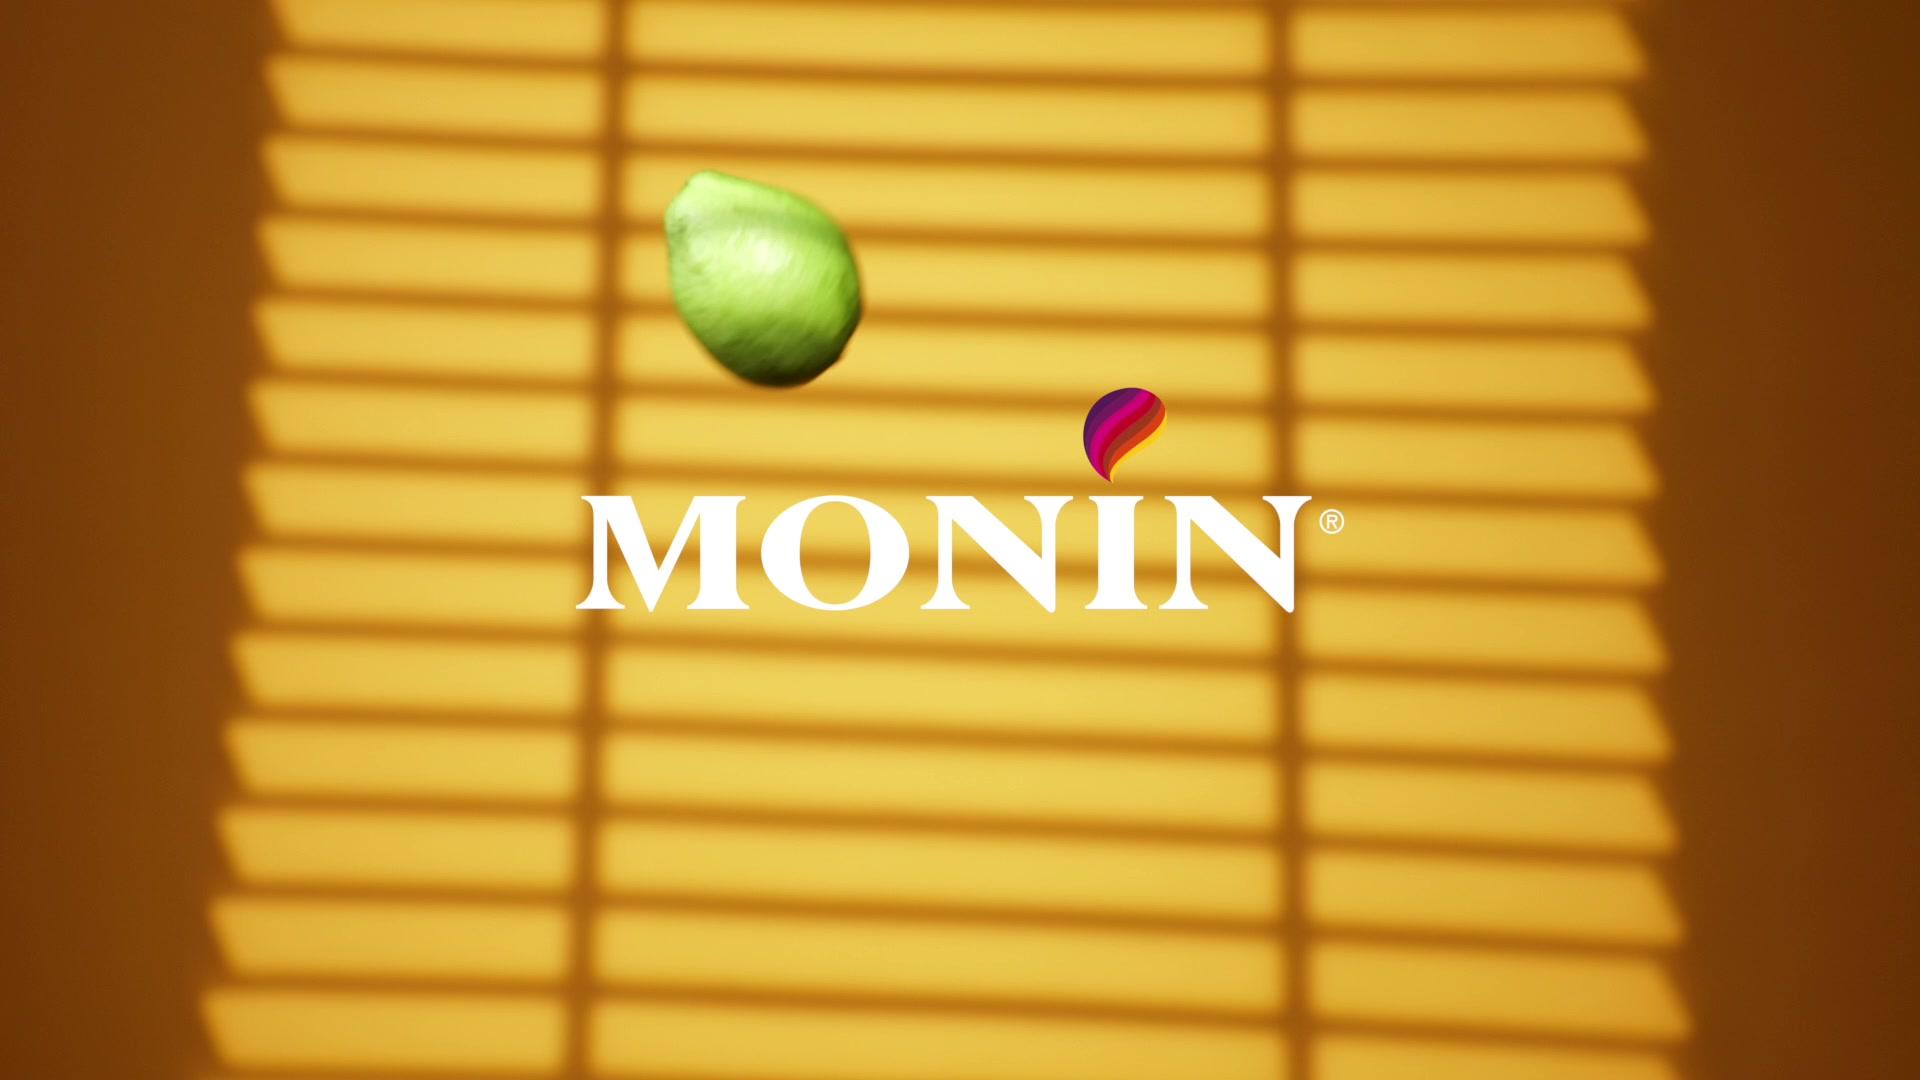 莫林 MONIN Guava 广告